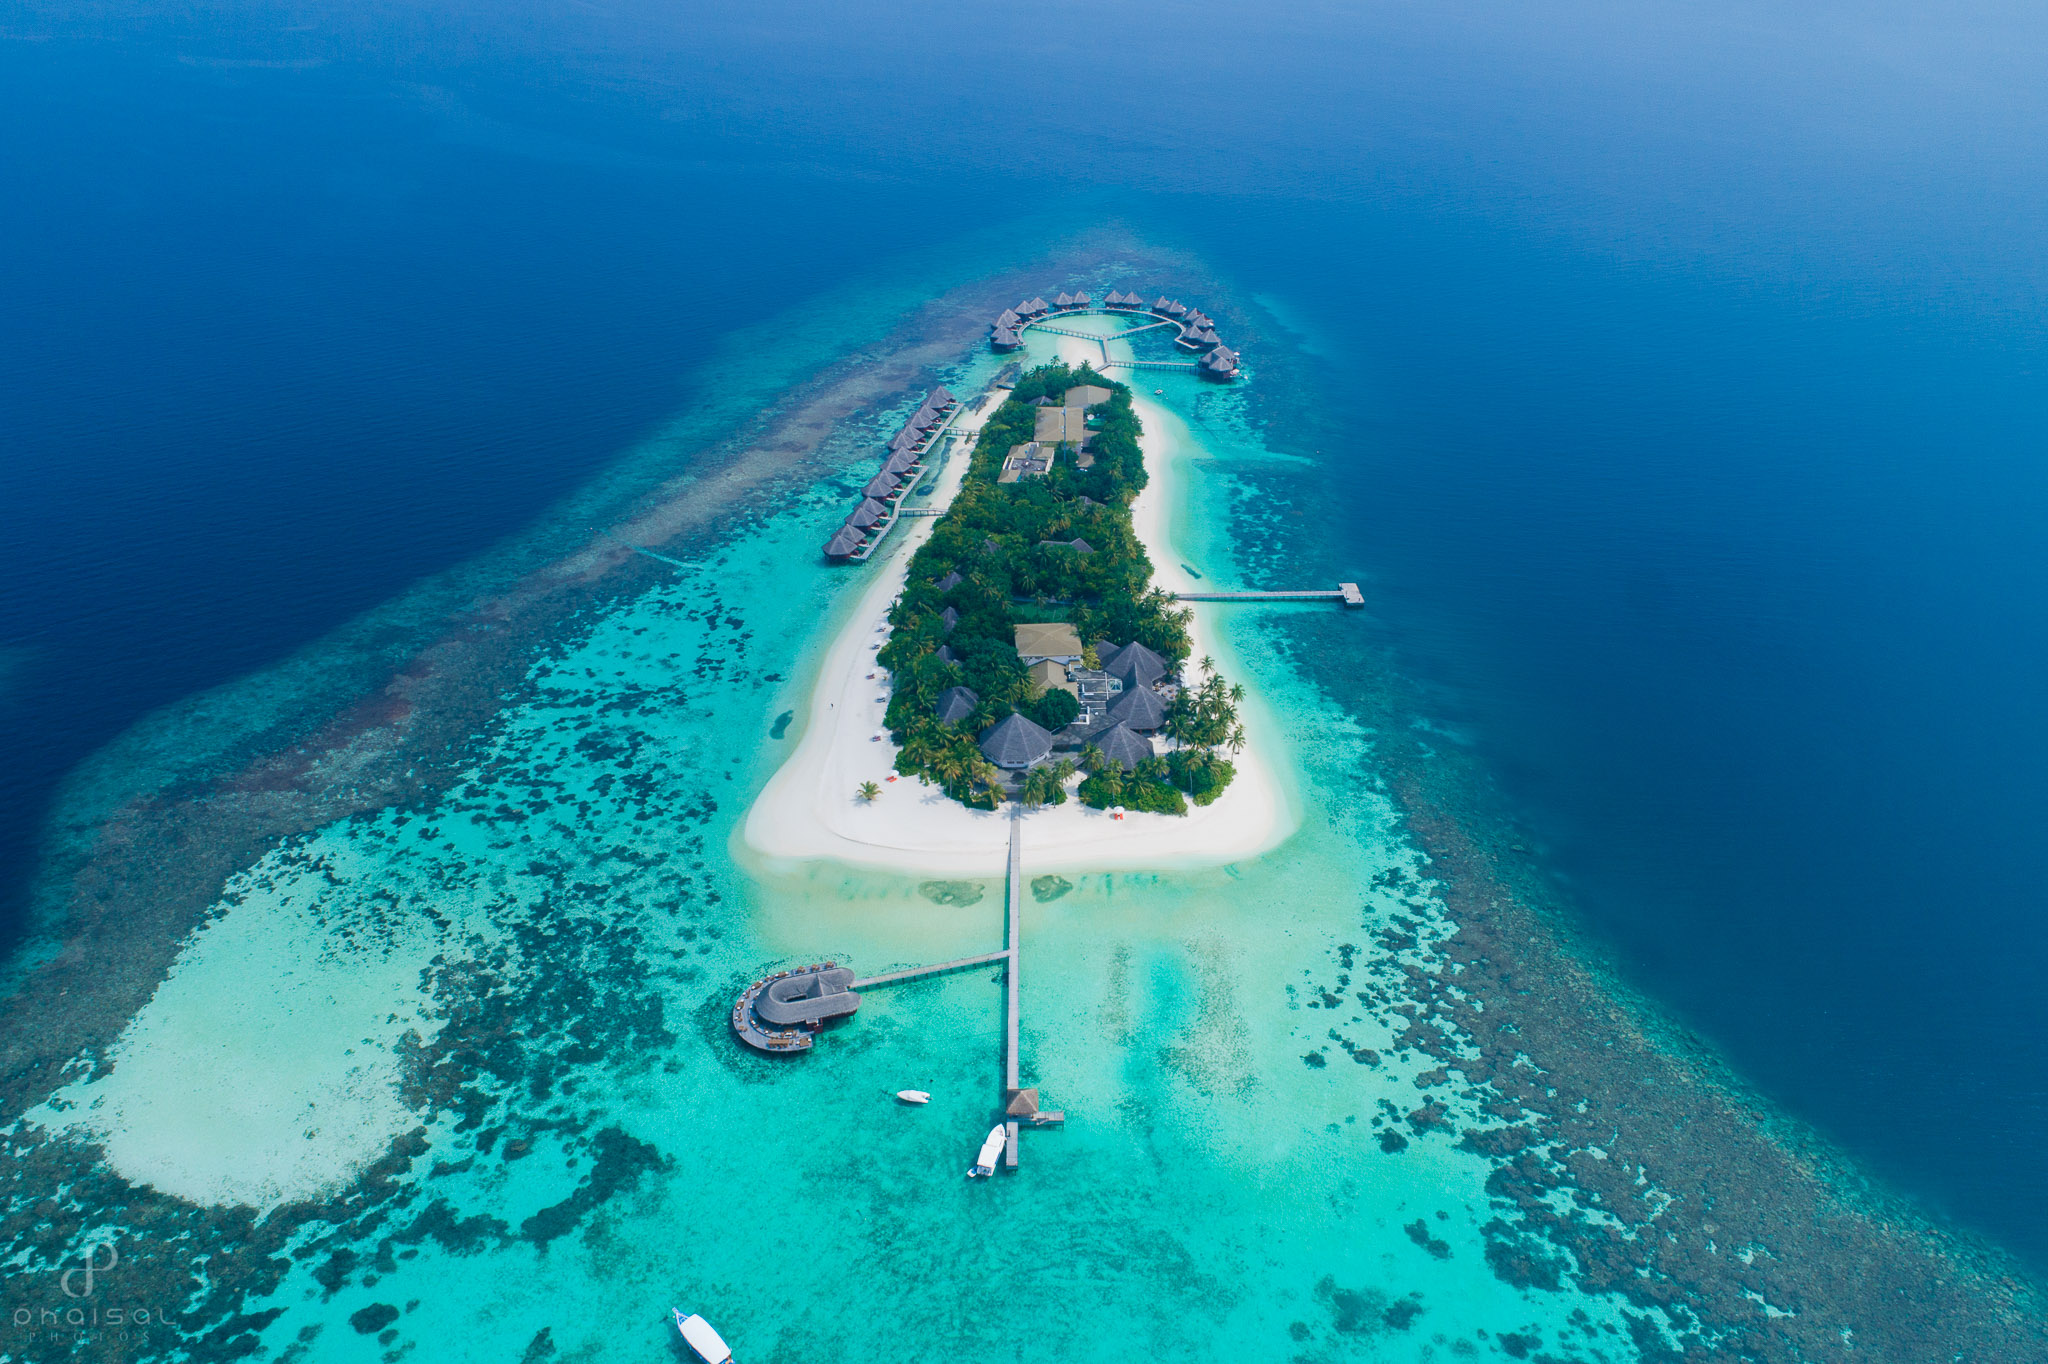 mirihi island resort maldives